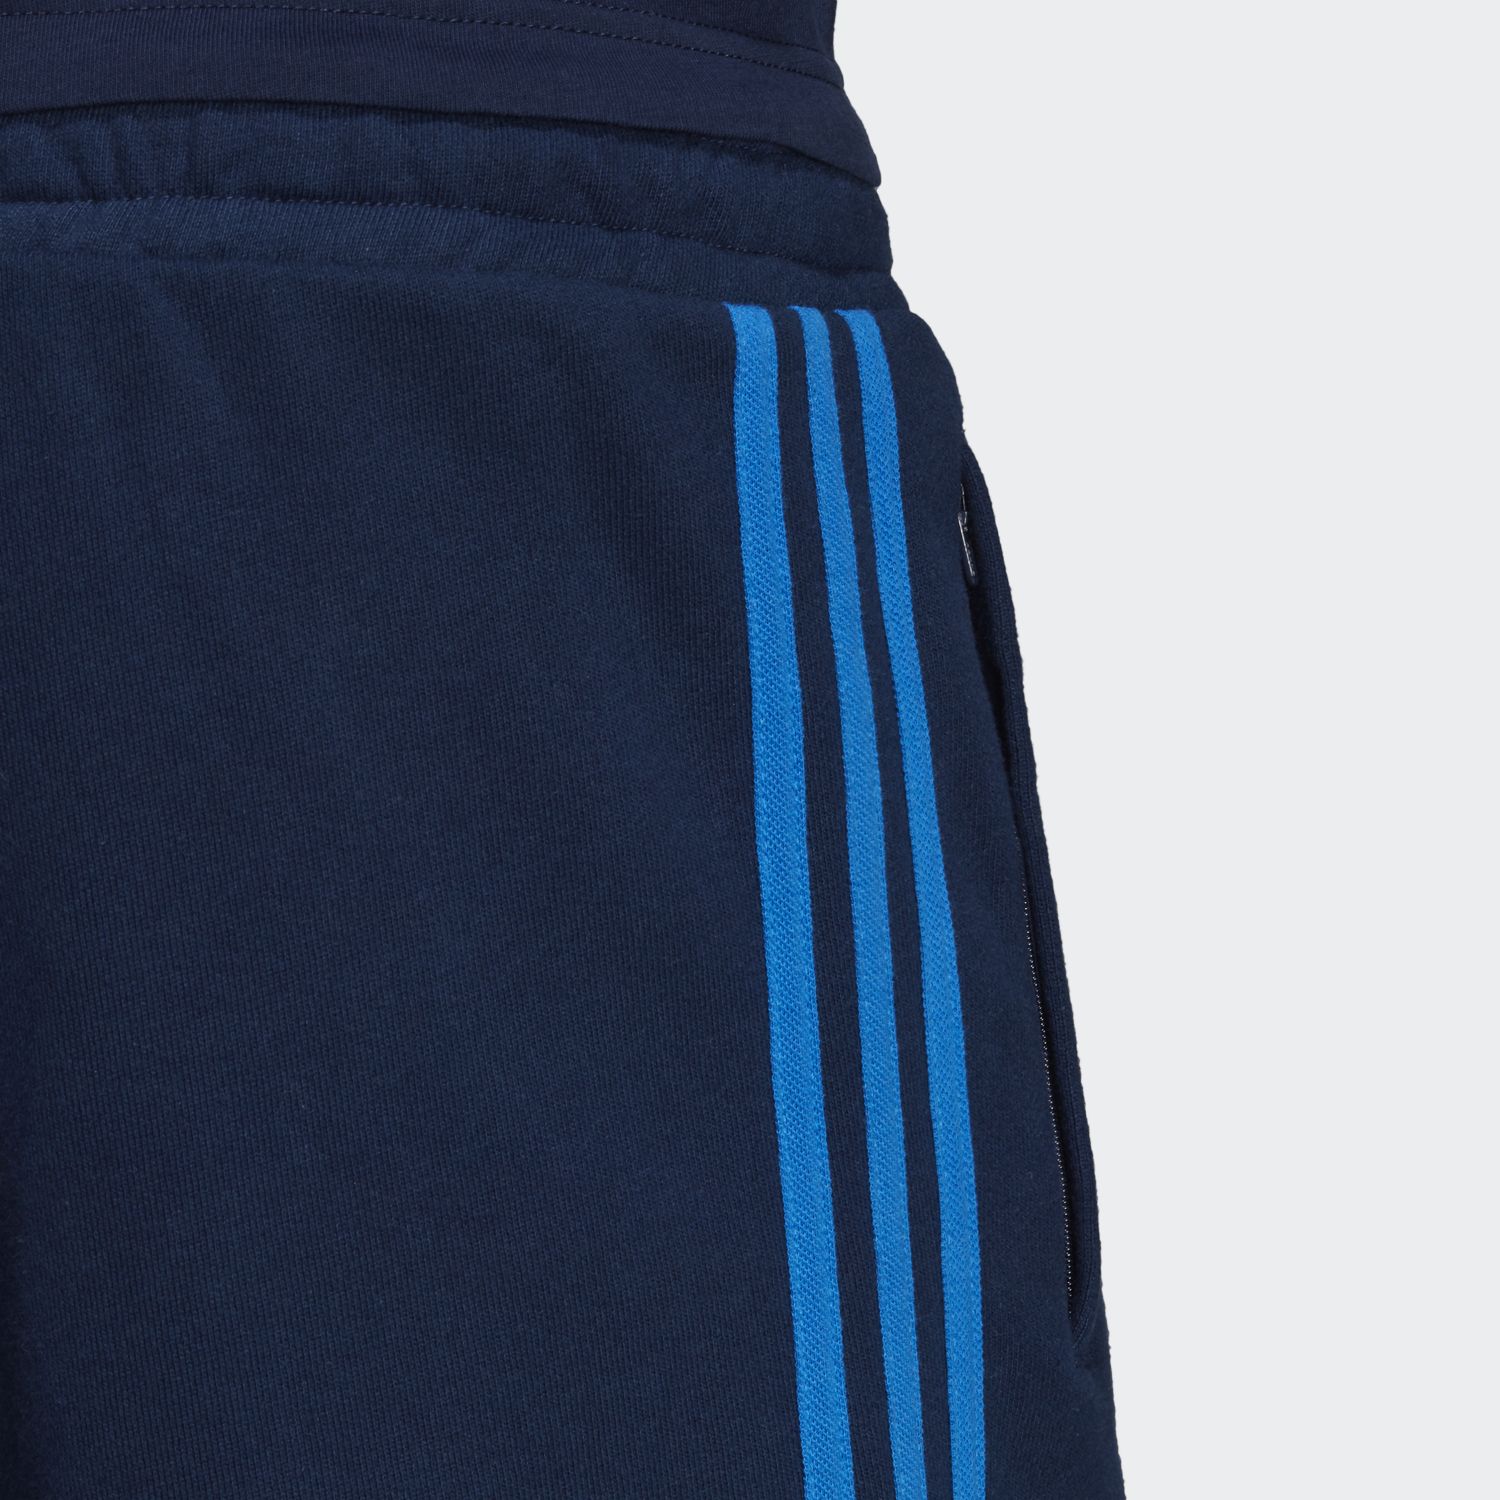 Adidas 3-Stripes Shorts - Men